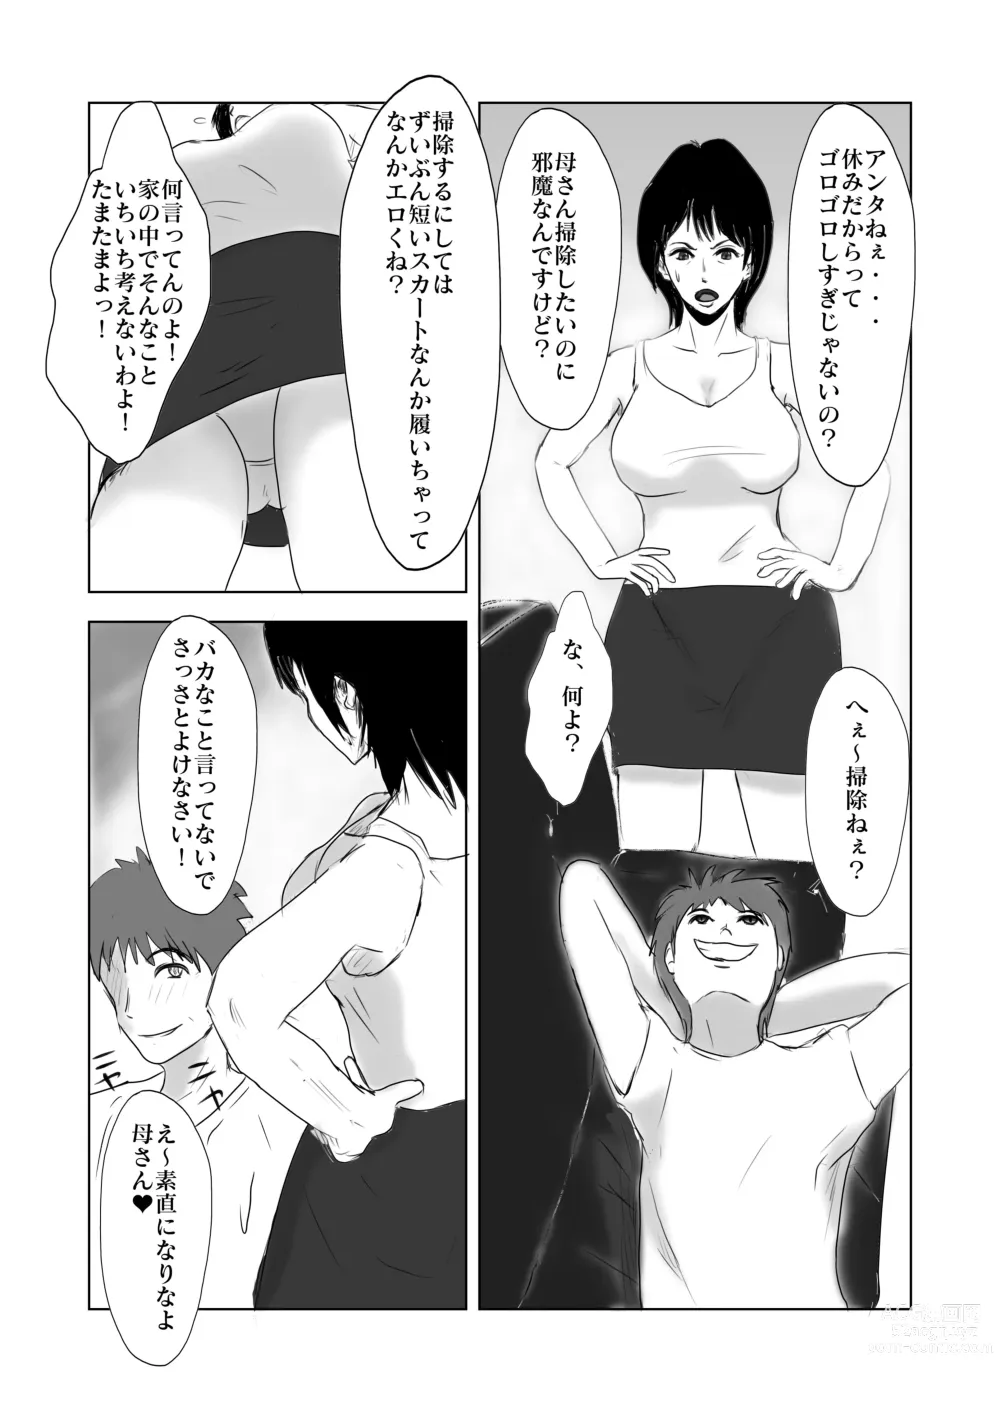 Page 2 of doujinshi ヤリたい母子が一線を越えた後